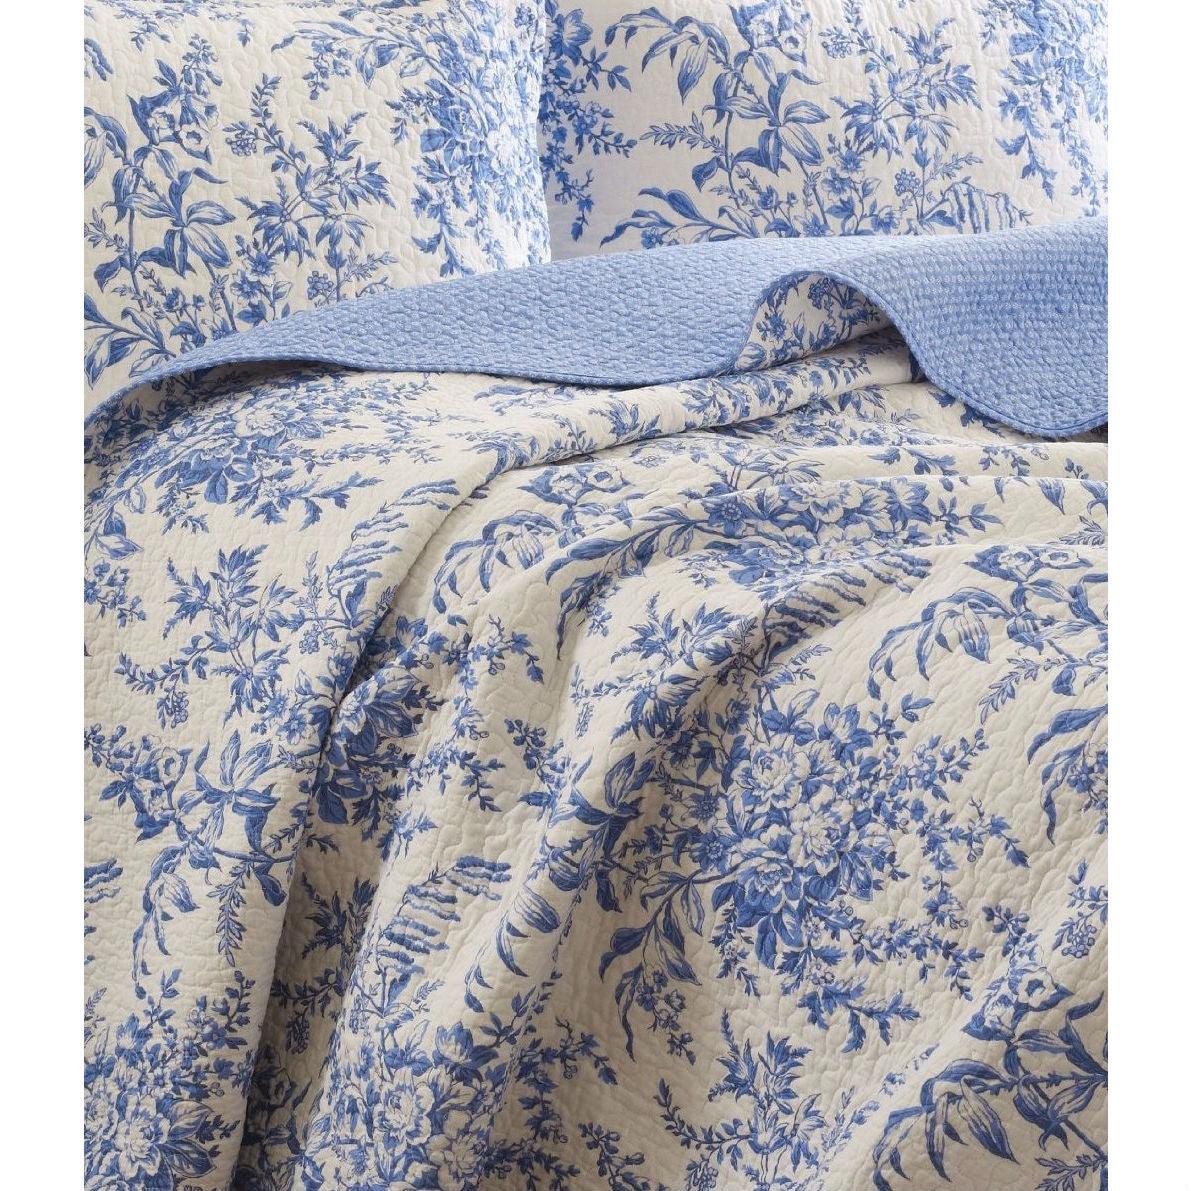 King size 100-Percent Cotton Quilt Bedspread Set with Blue White Floral Leaves Pattern - beddingbag.com